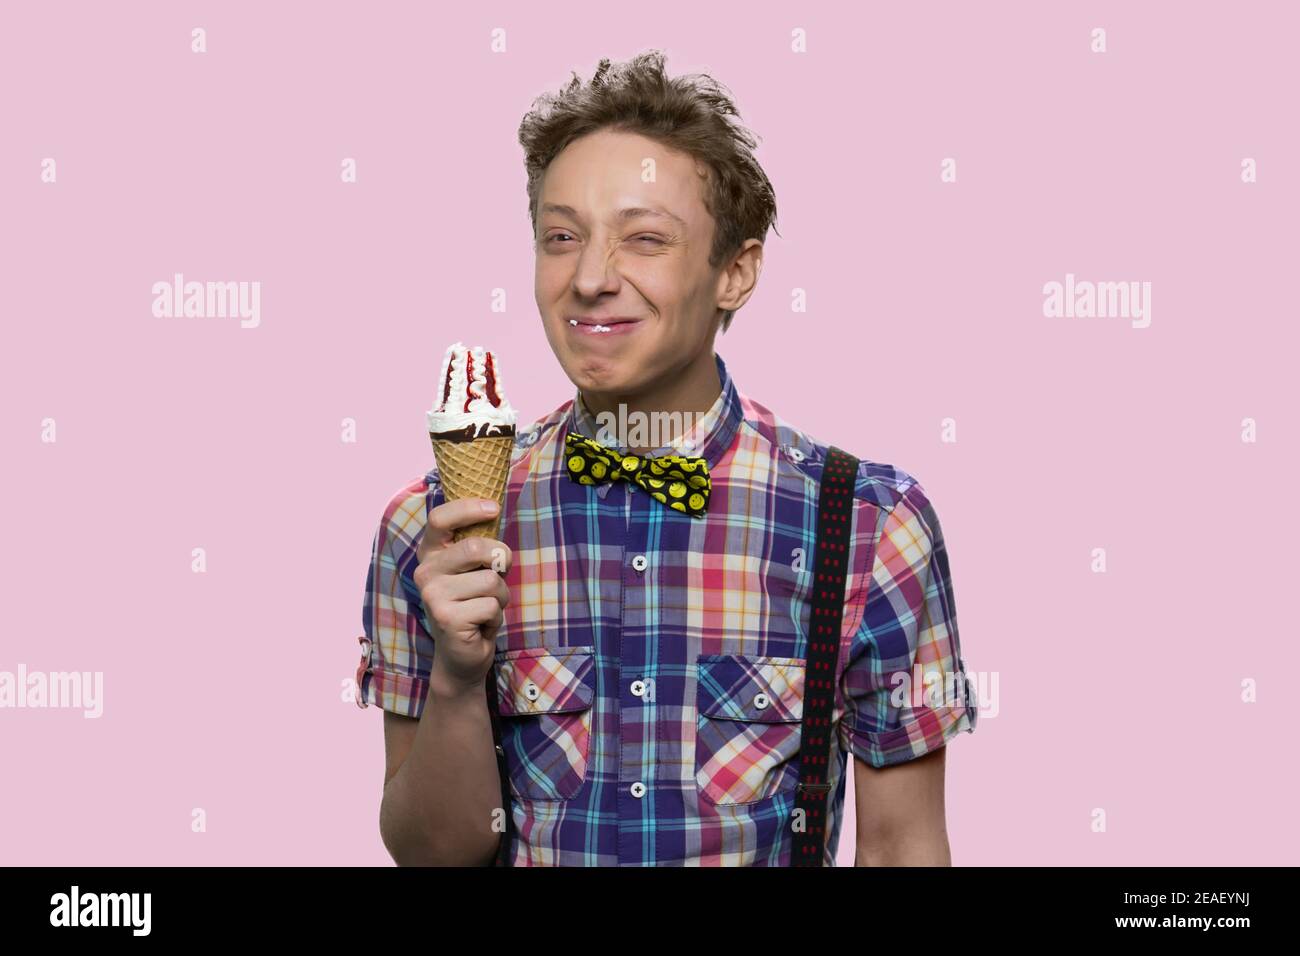 Smiling boy is eating icecream. Stock Photo